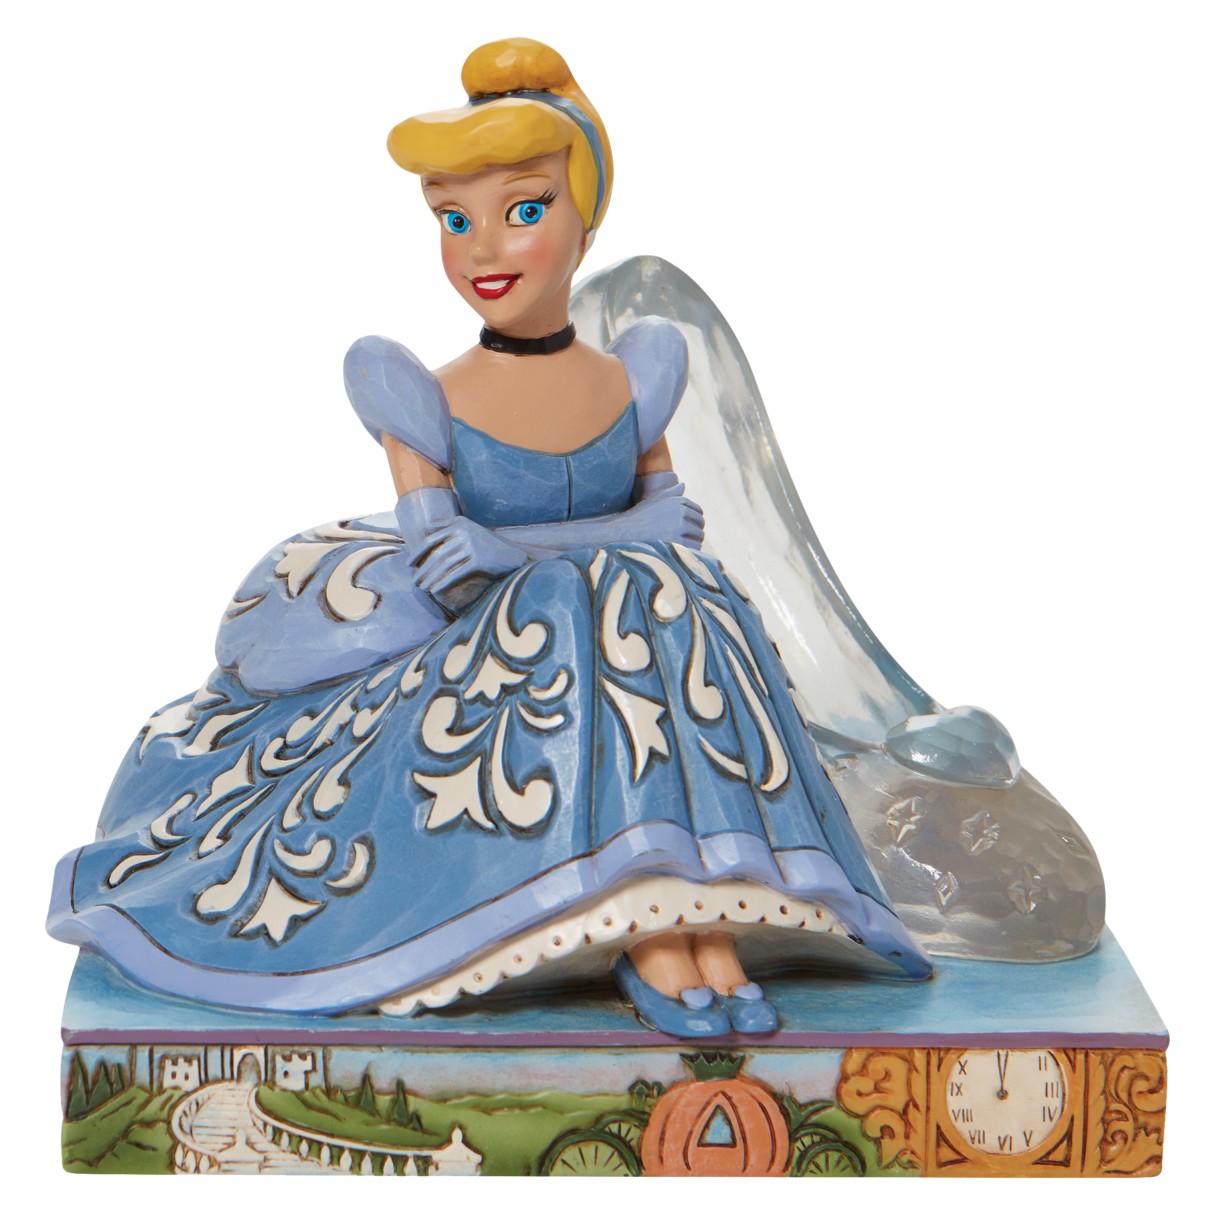 Cinderella Glass Slipper Figure by Shore shopDisney | Jim